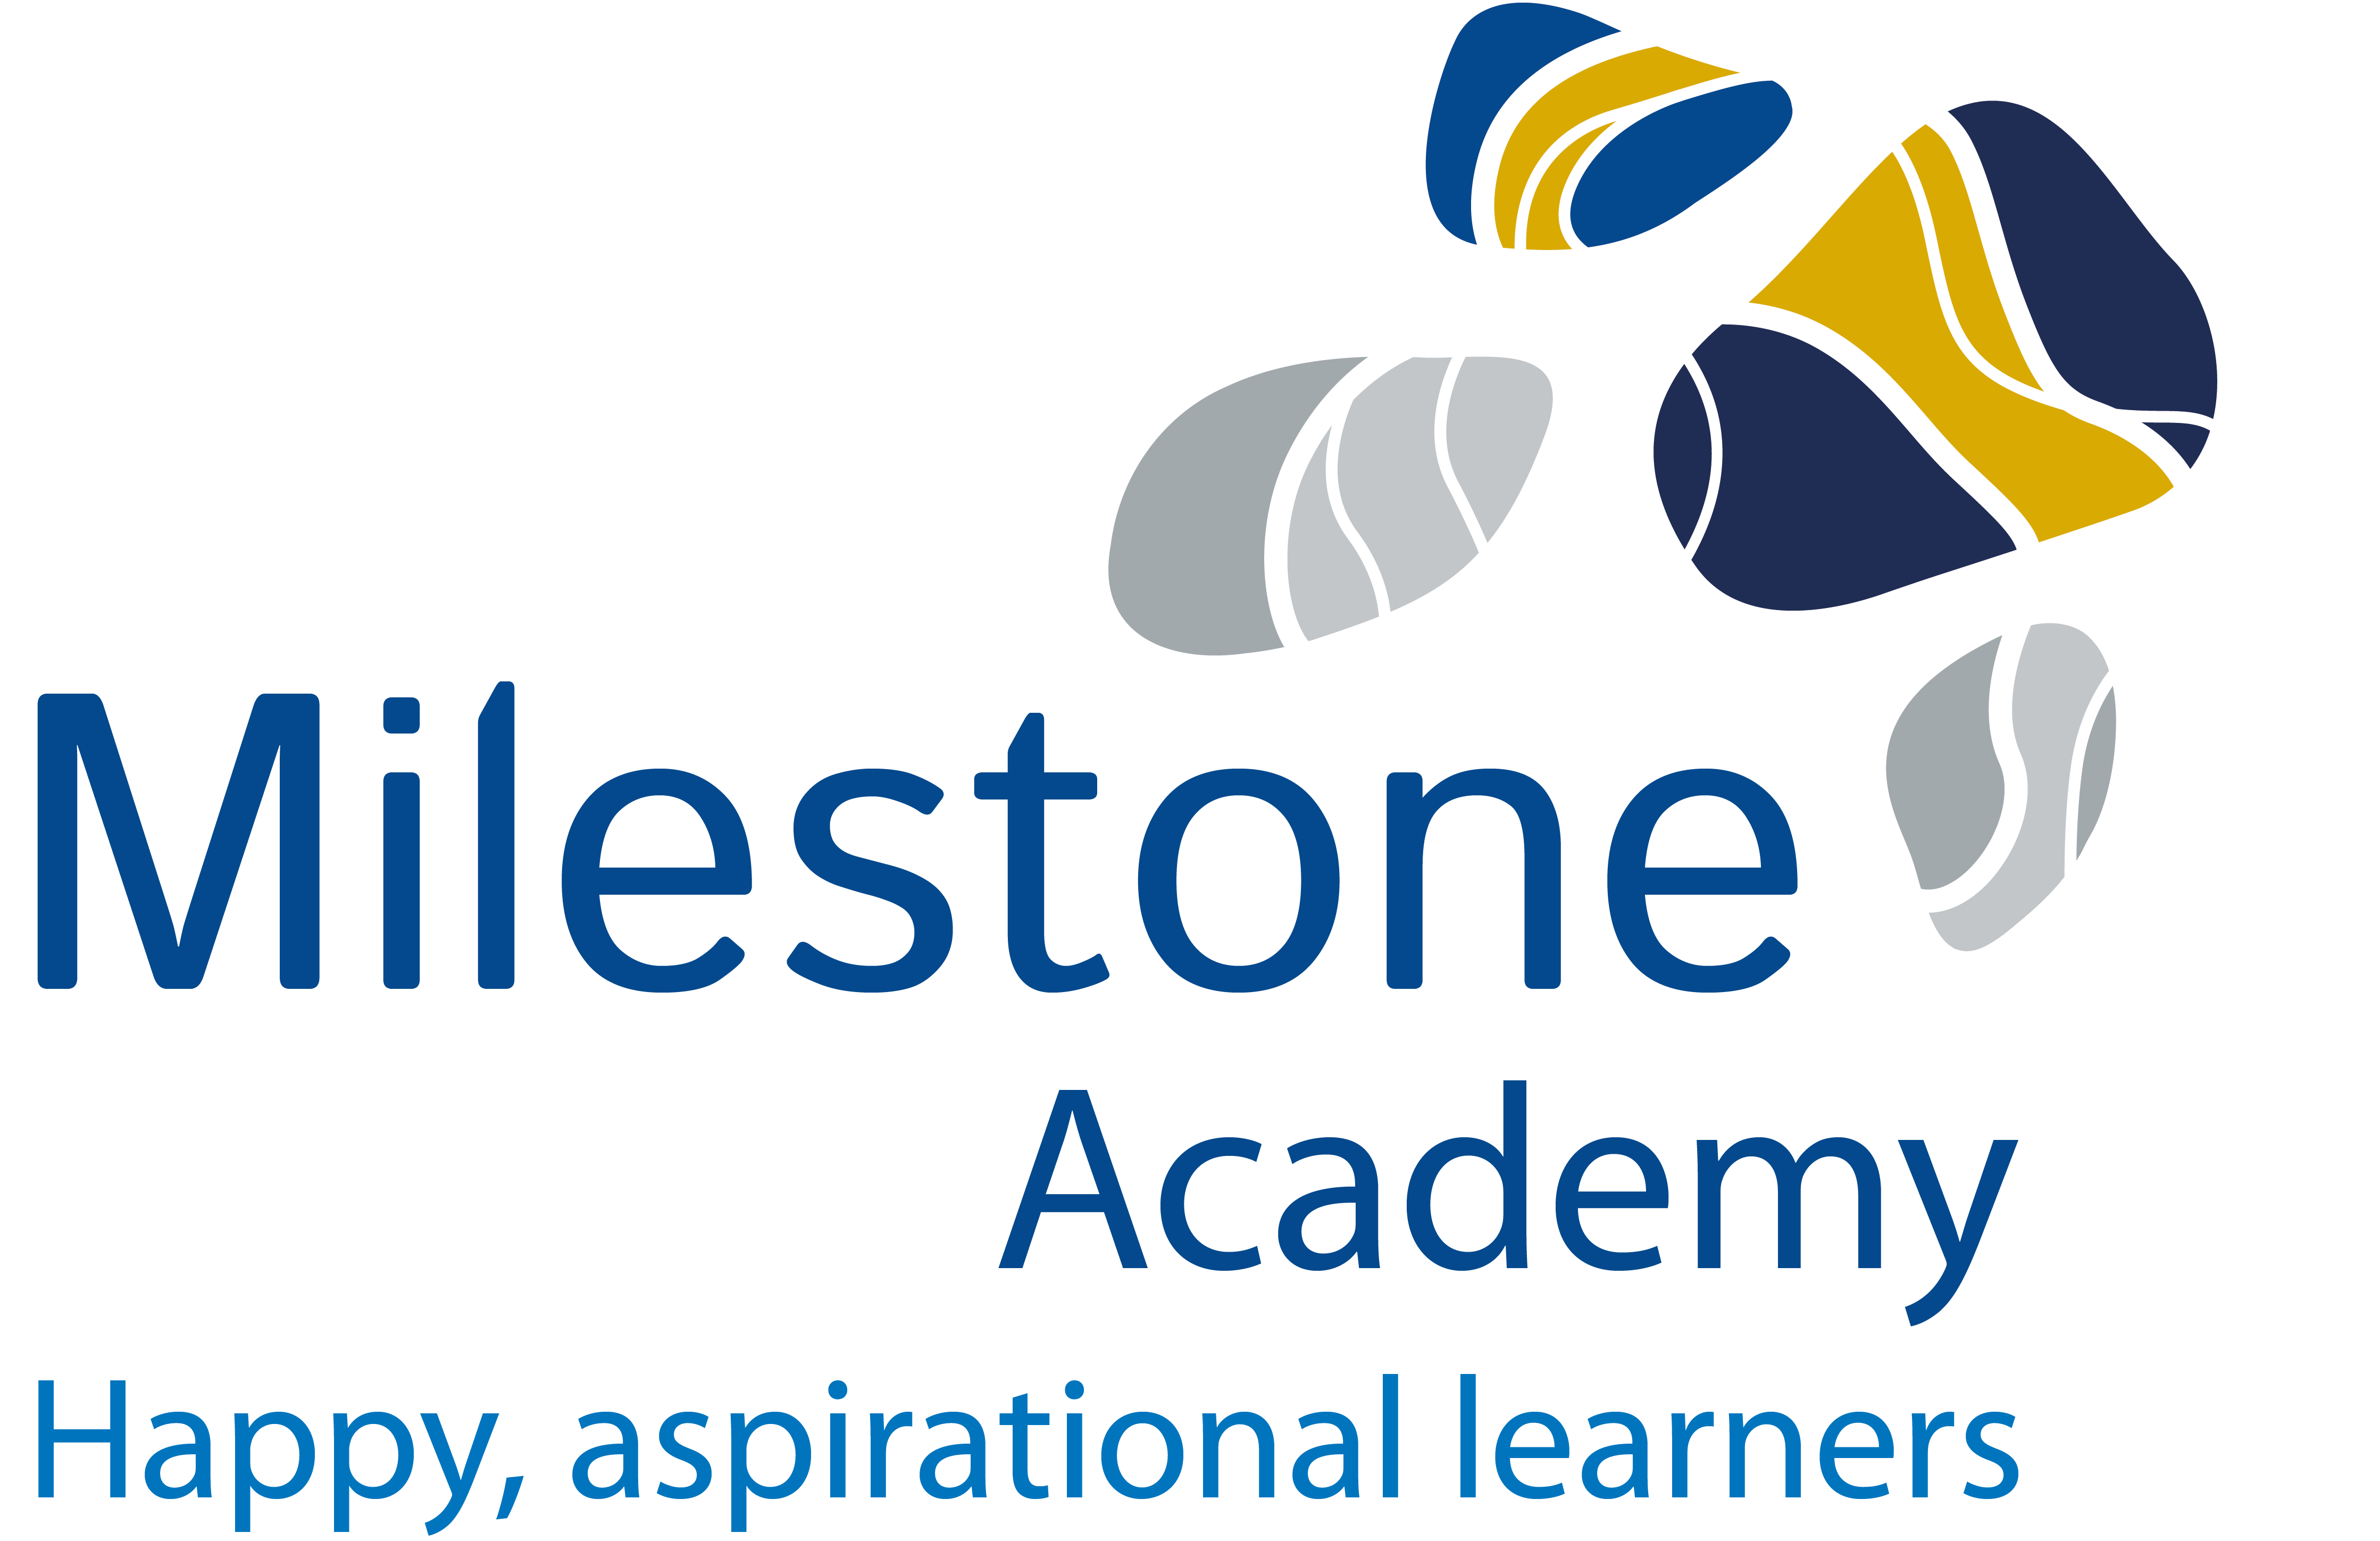 Milestone Academy logo